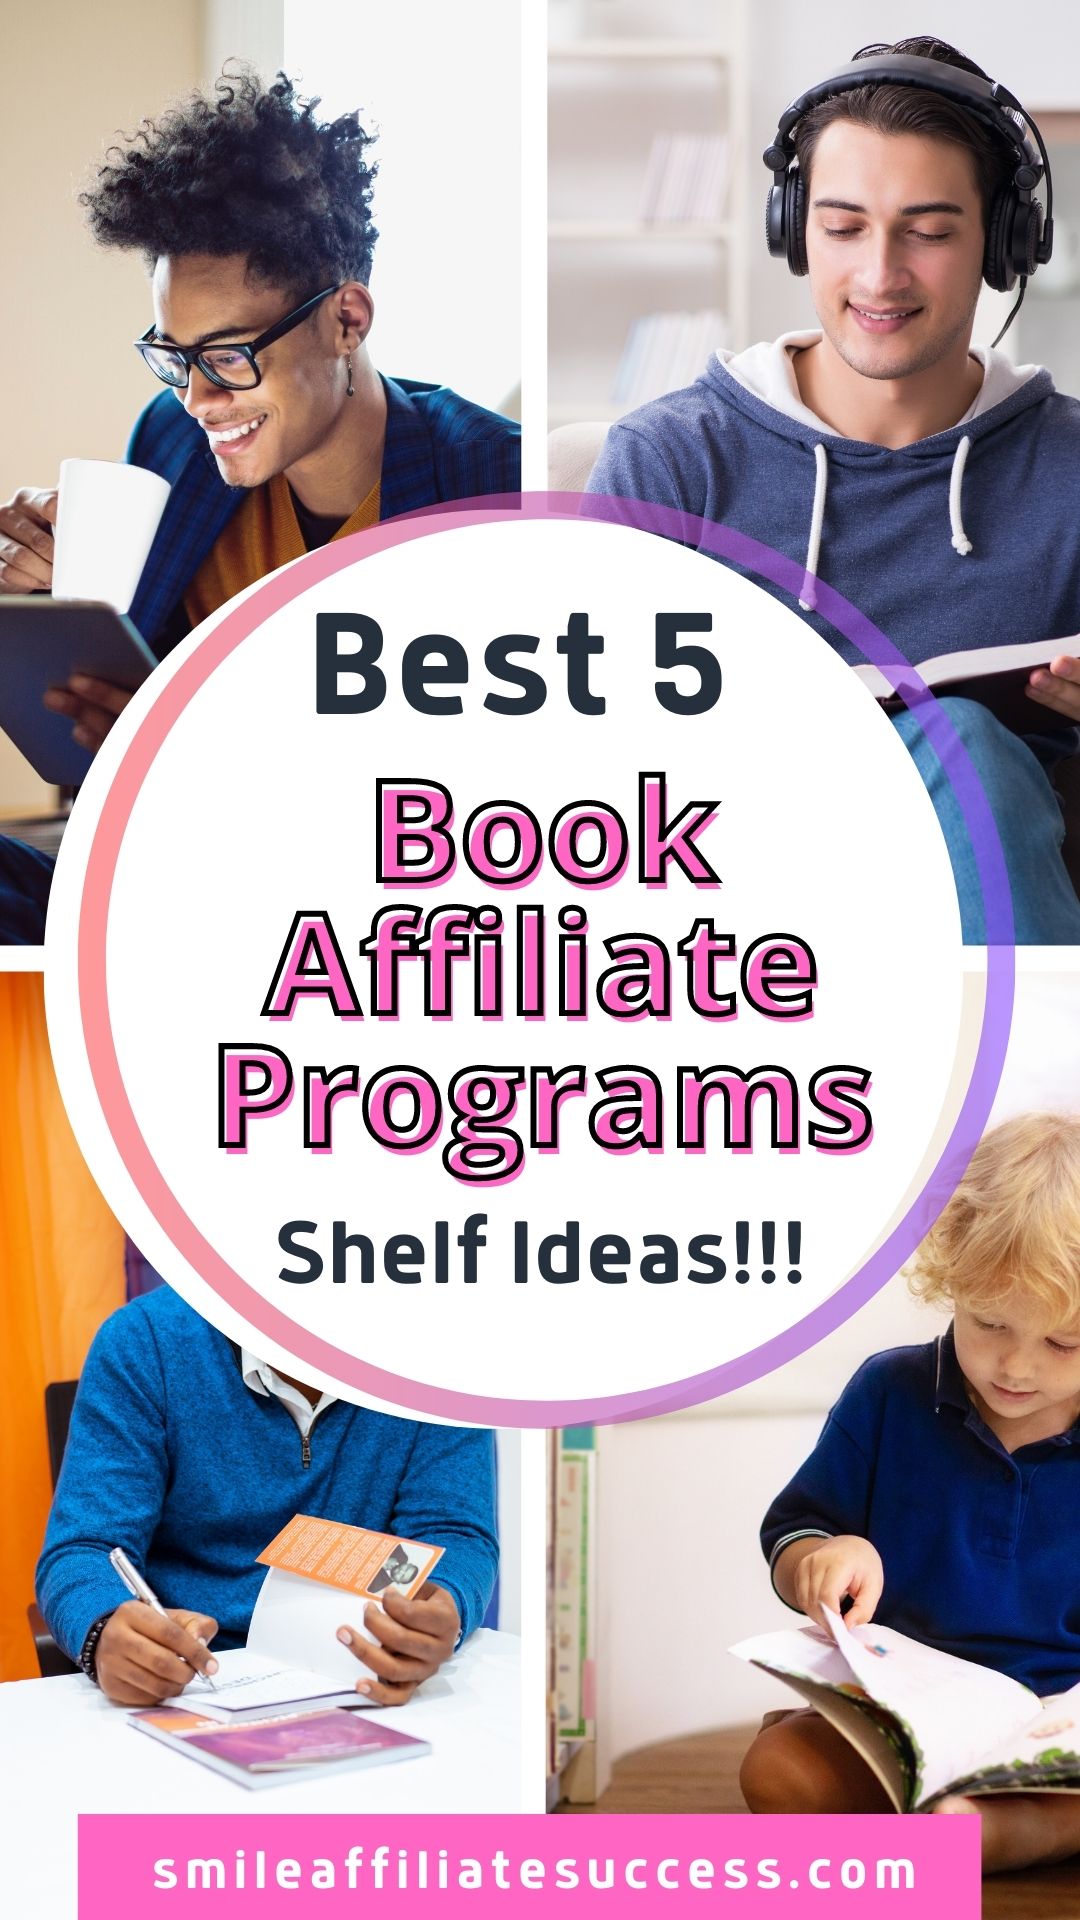 Best 5 Book Affiliate Programs